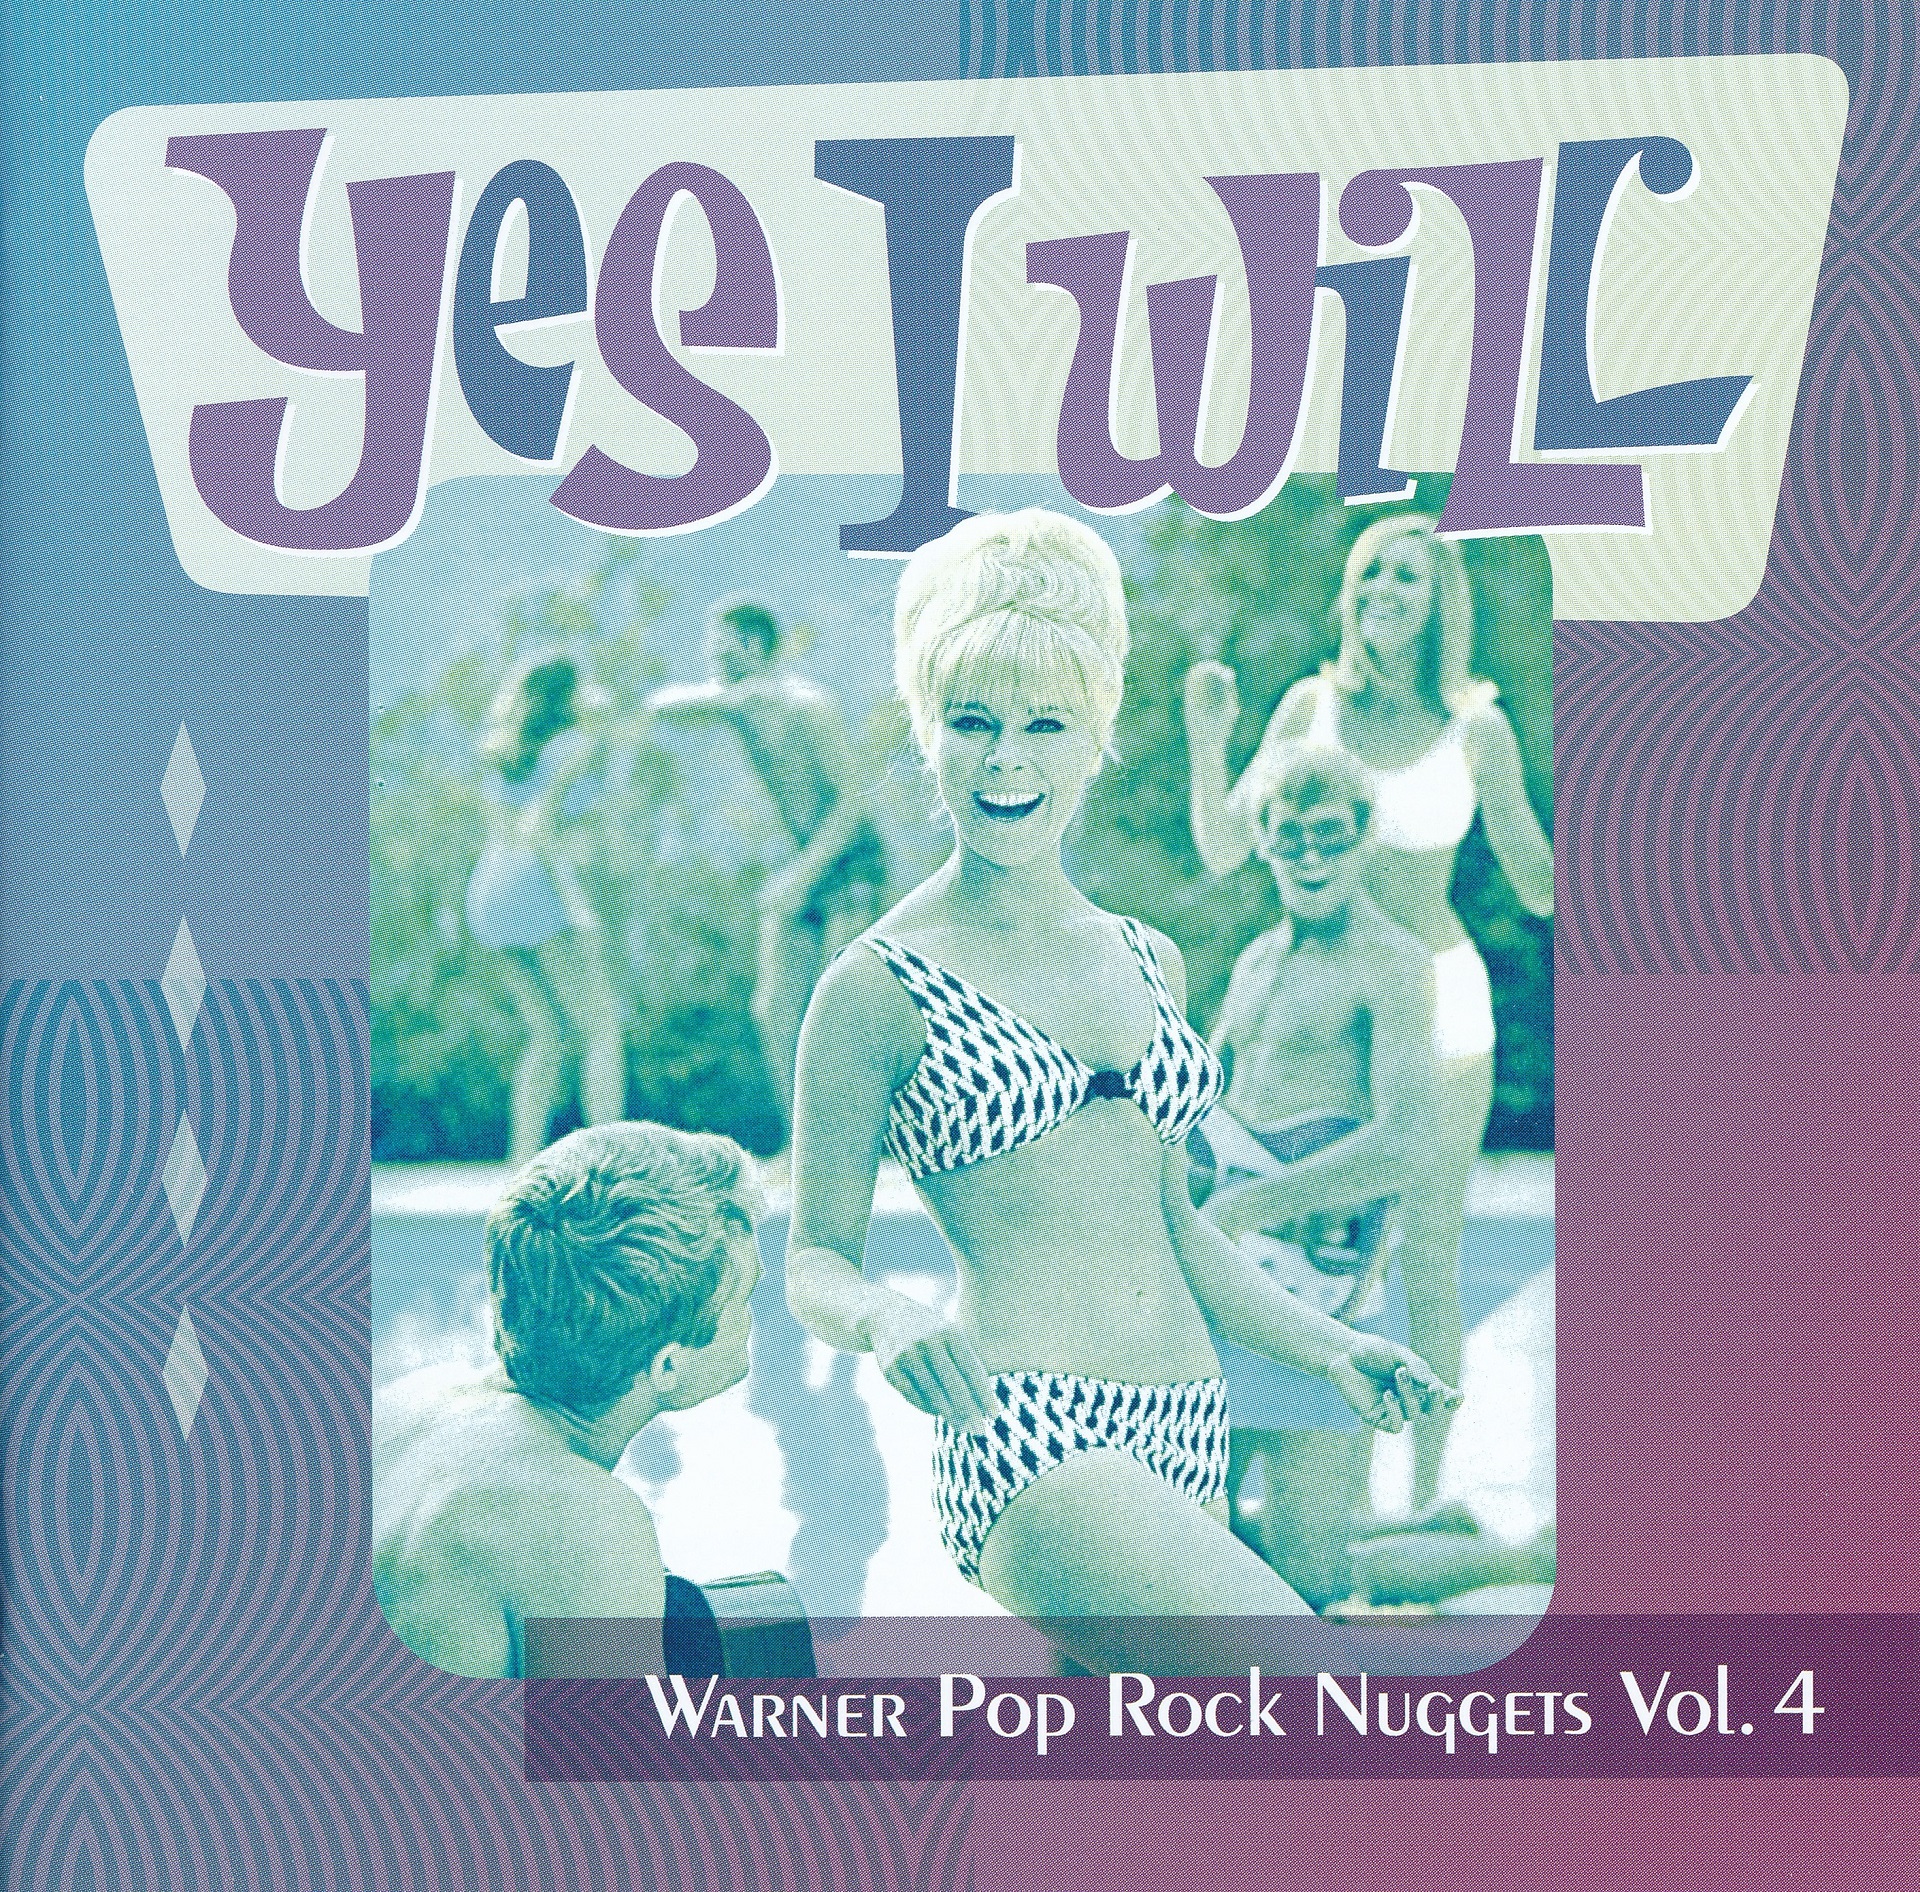 Warner Pop Rock Nuggets Volume 4 Yes I Will